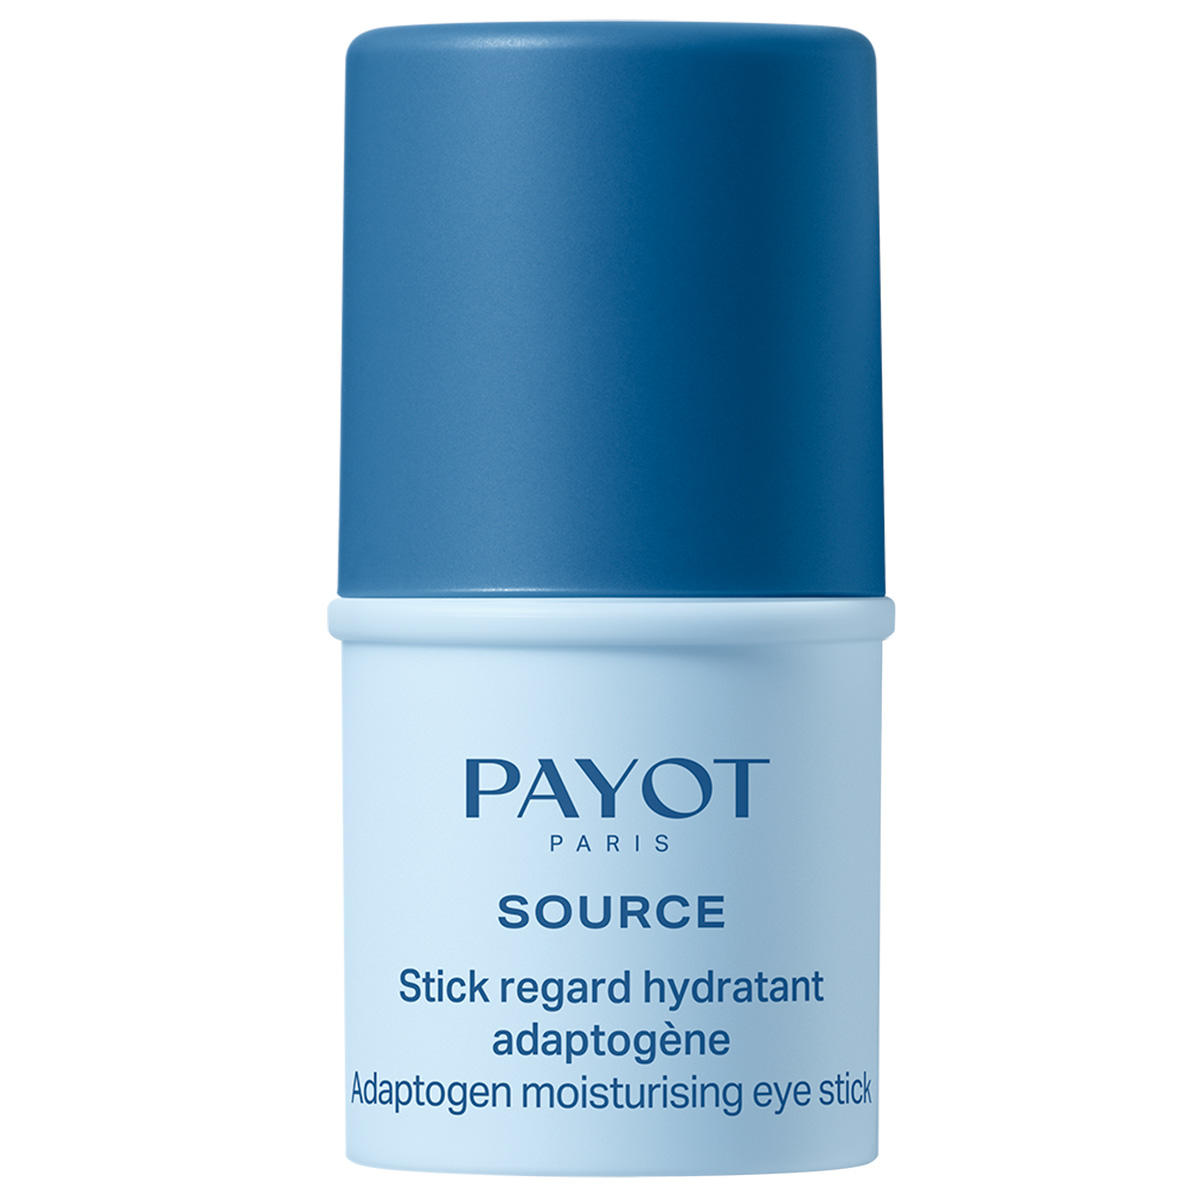 Payot Source Stick regard hydratant adatogène 4,5 g